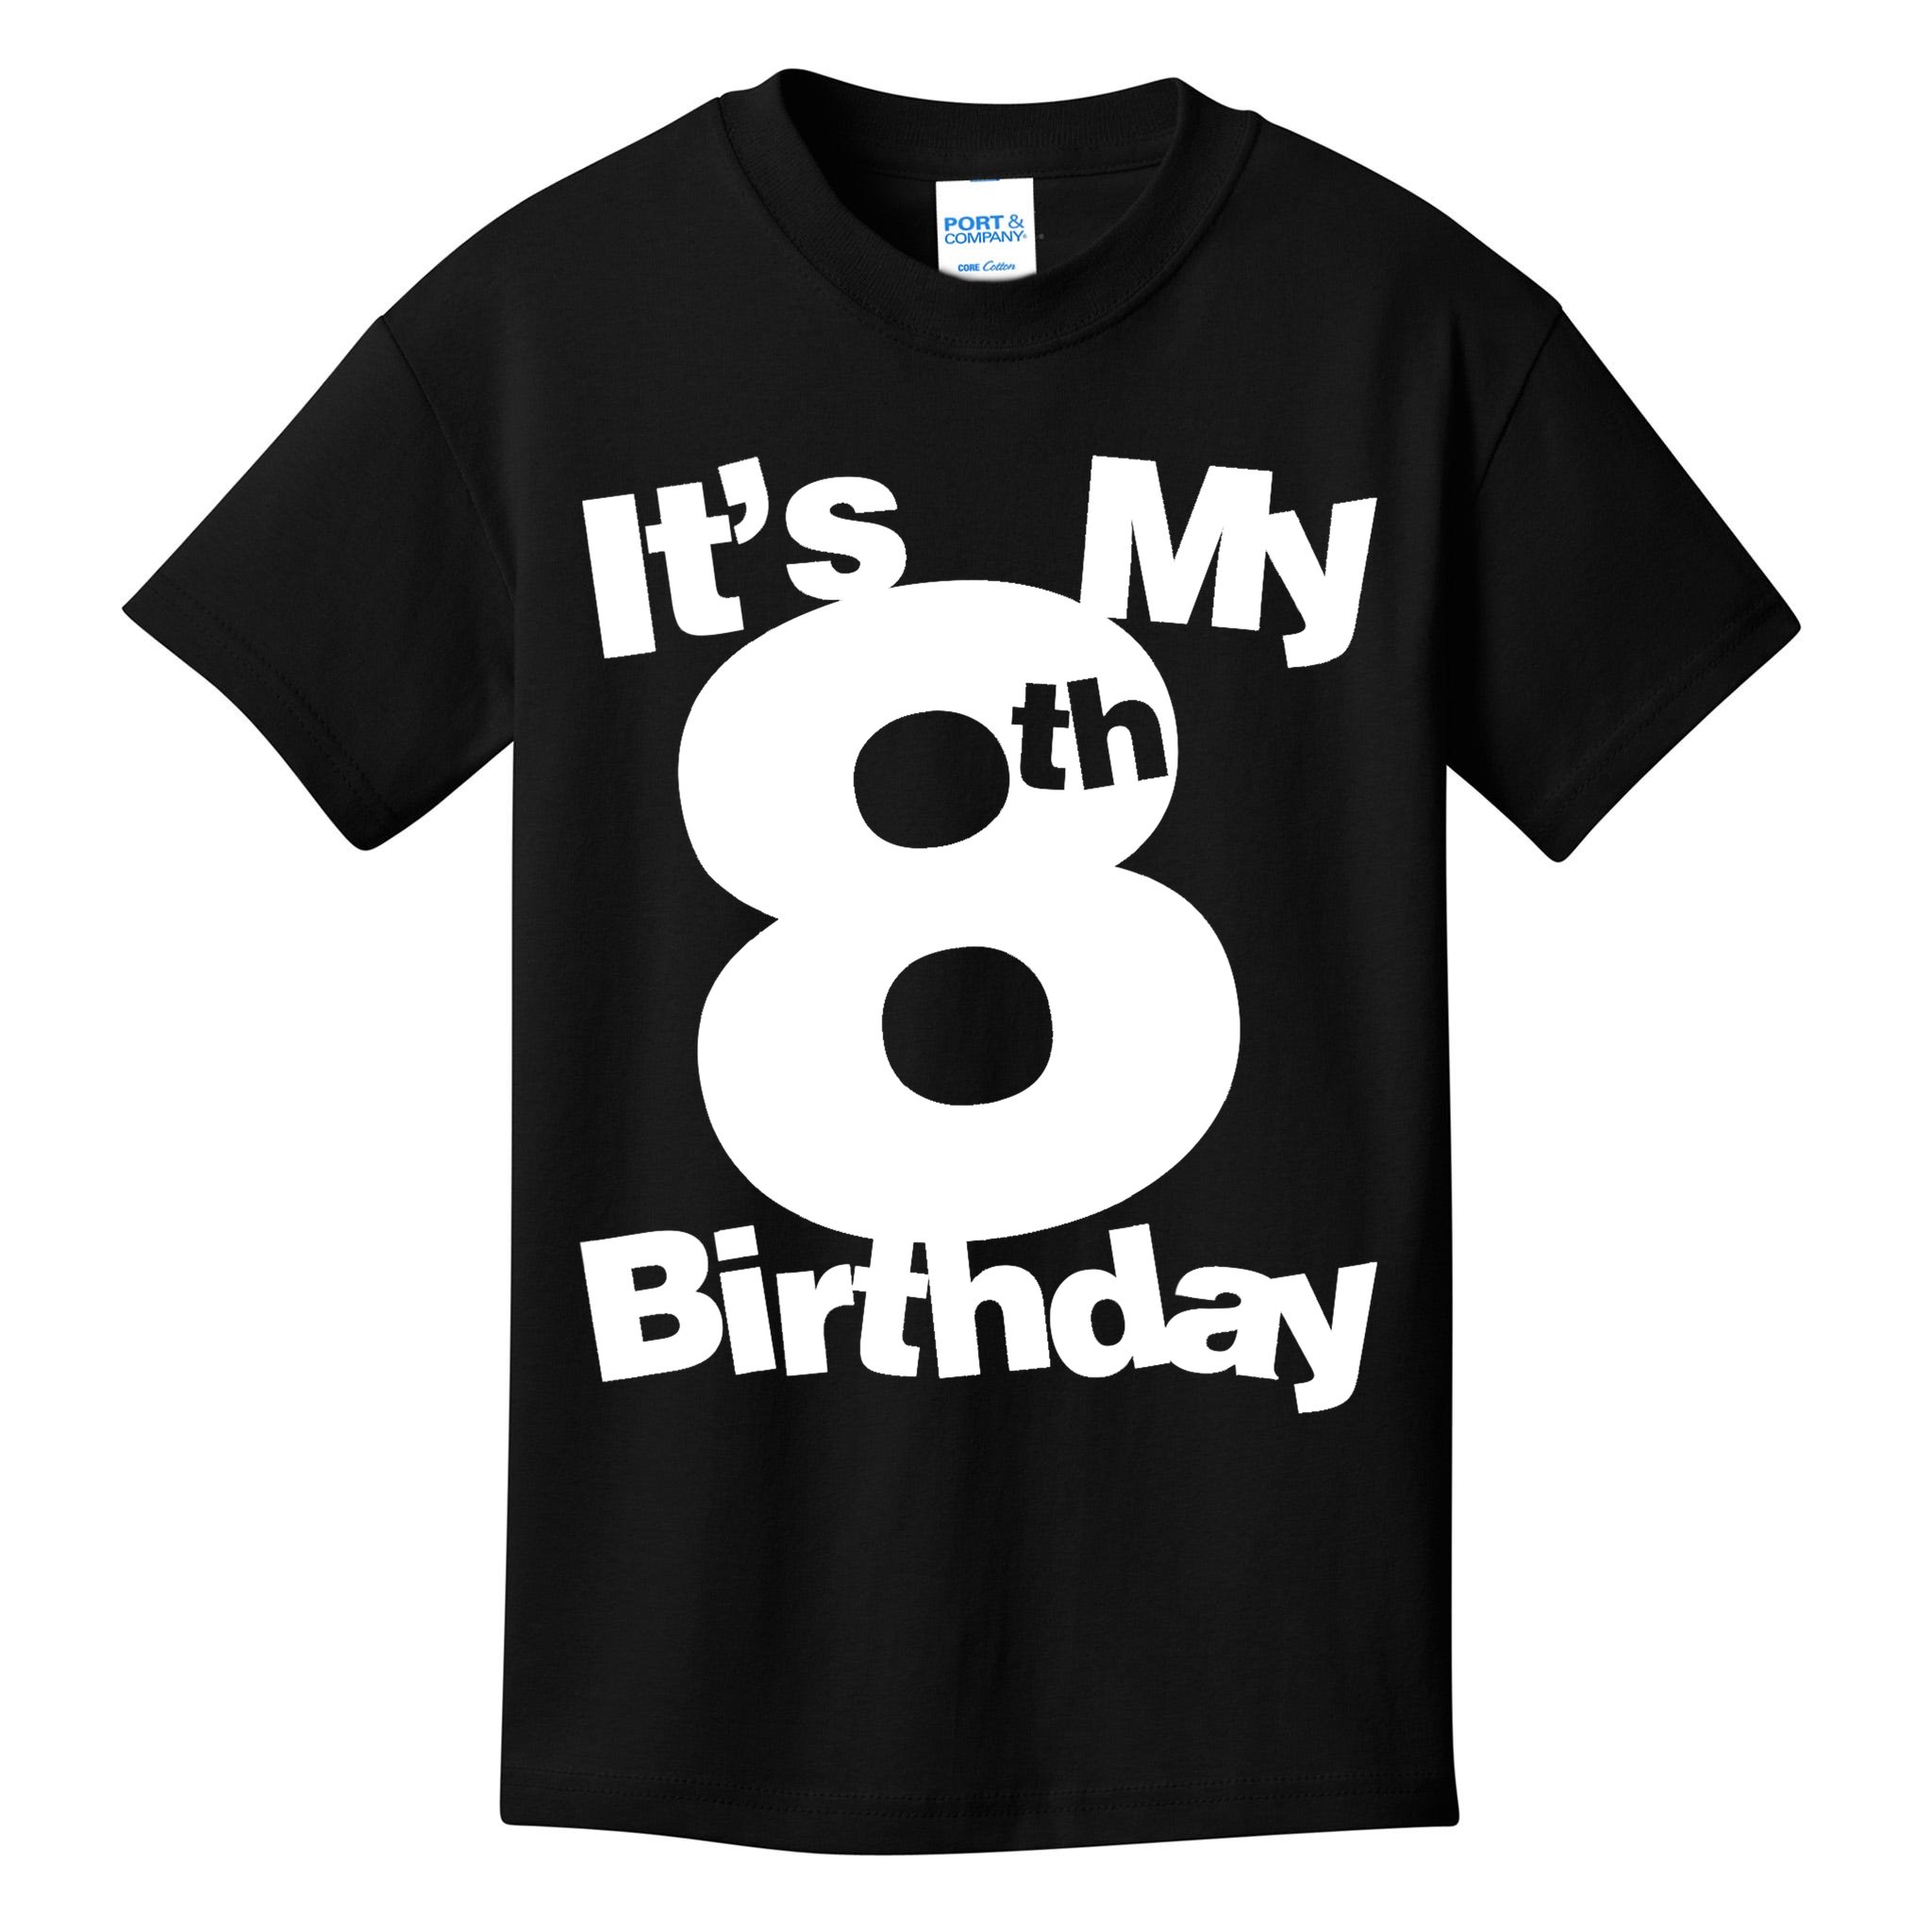 8th Birthday Shirt. Its My 8th Birthday 8 Year Old Birthday TShirt Kids ...